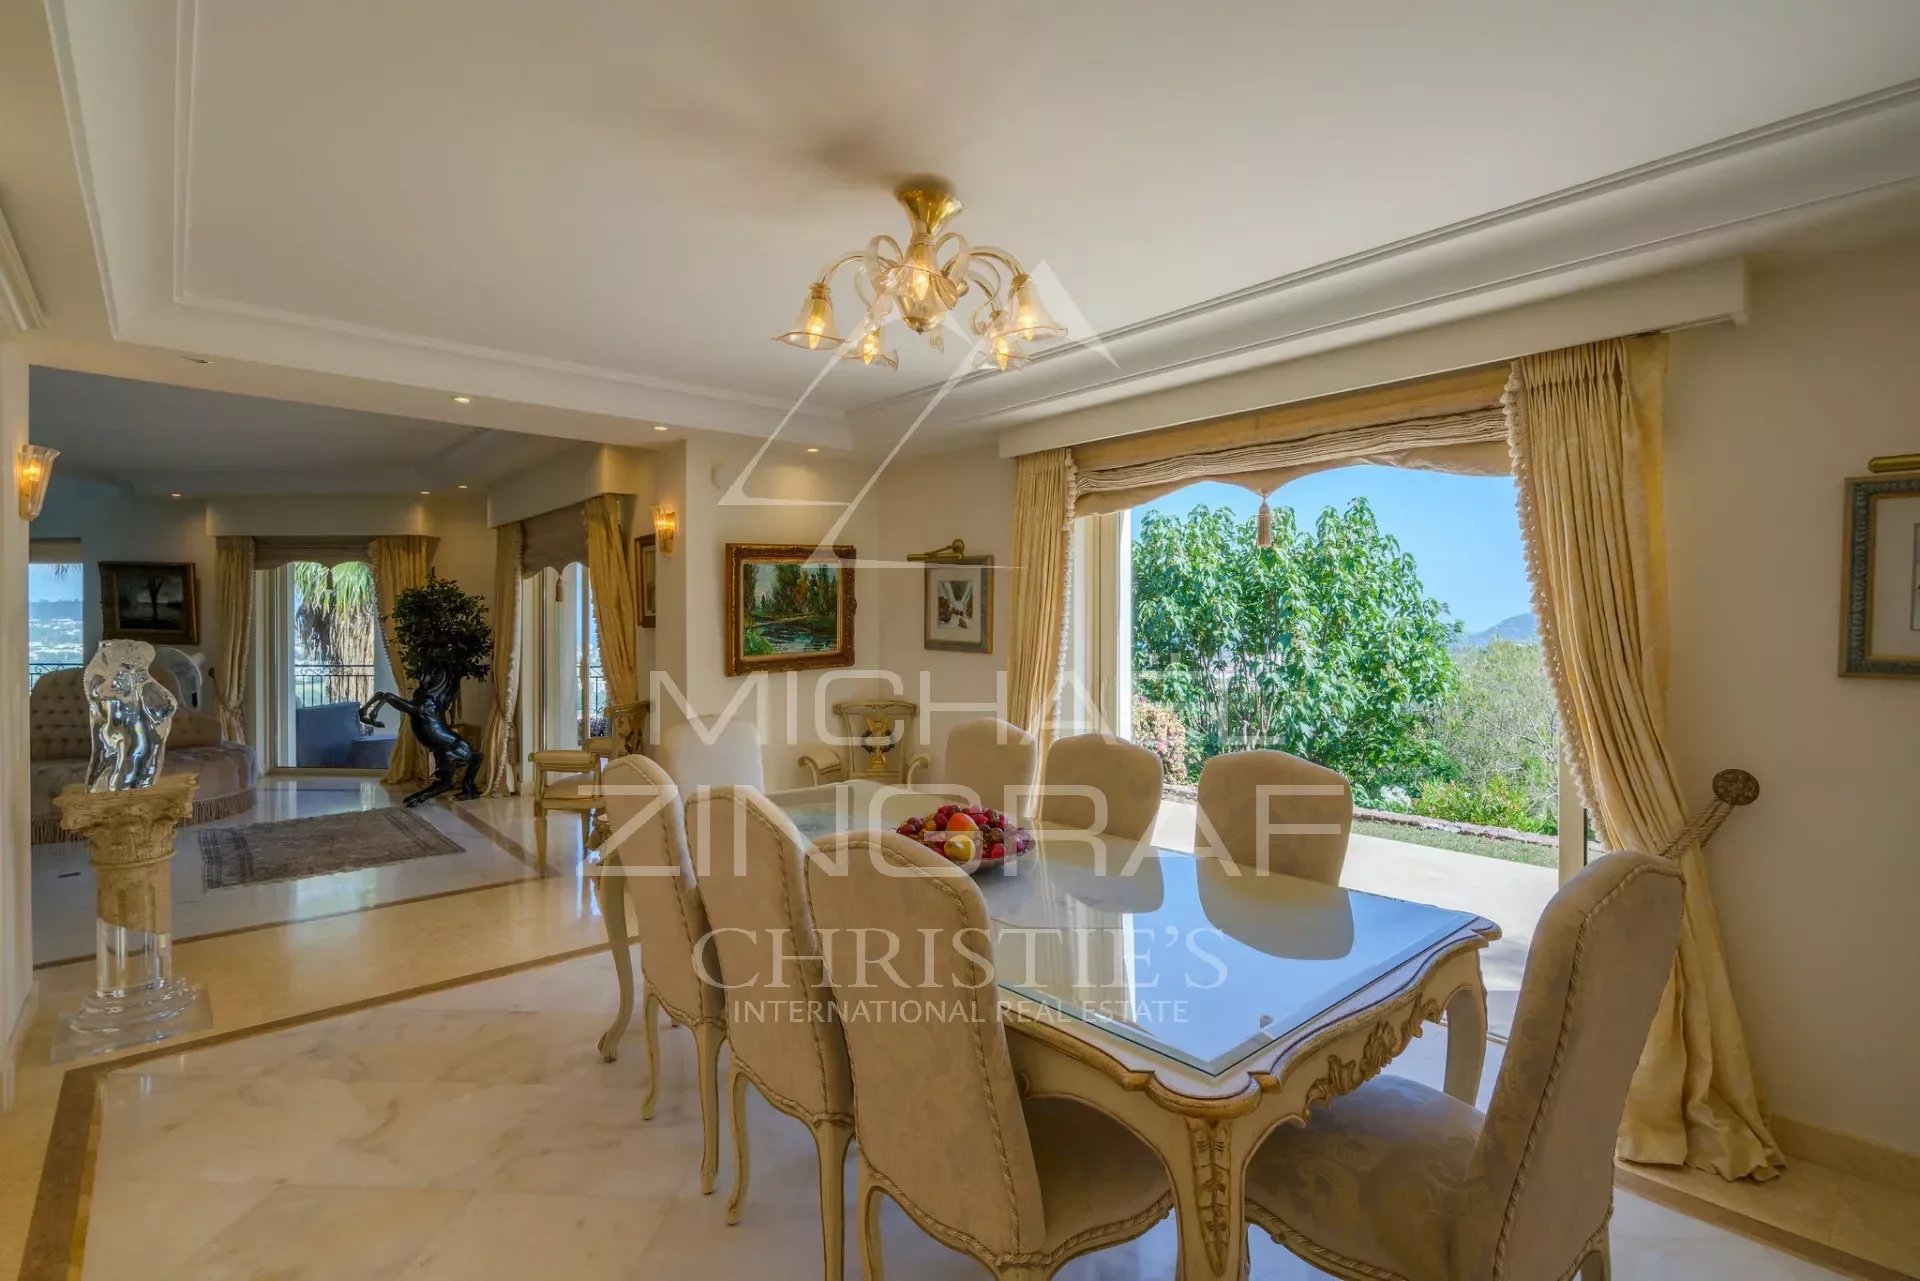 Close to Cannes - Mandelieu-La-Napoule - Neo-Provencal villa with panoramic sea view